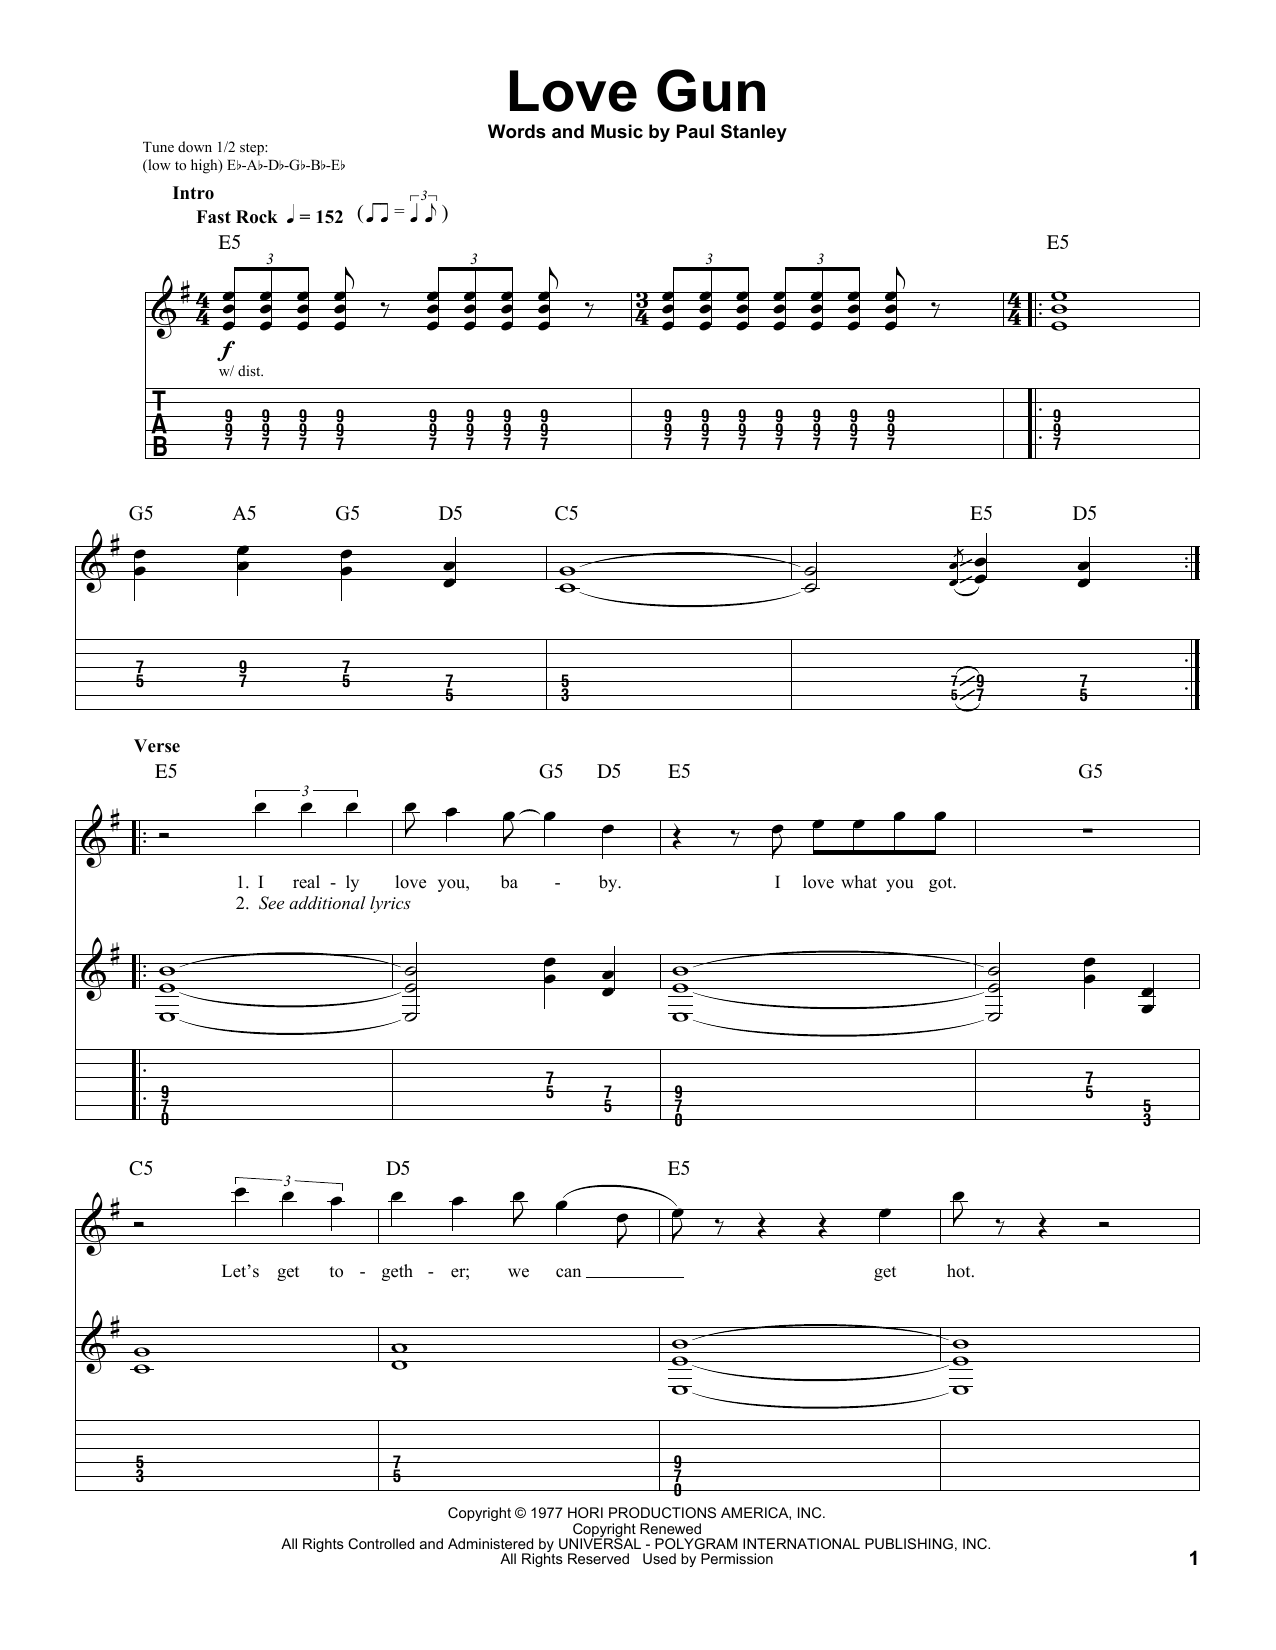 KISS Love Gun Sheet Music Notes & Chords for Bass Guitar Tab - Download or Print PDF